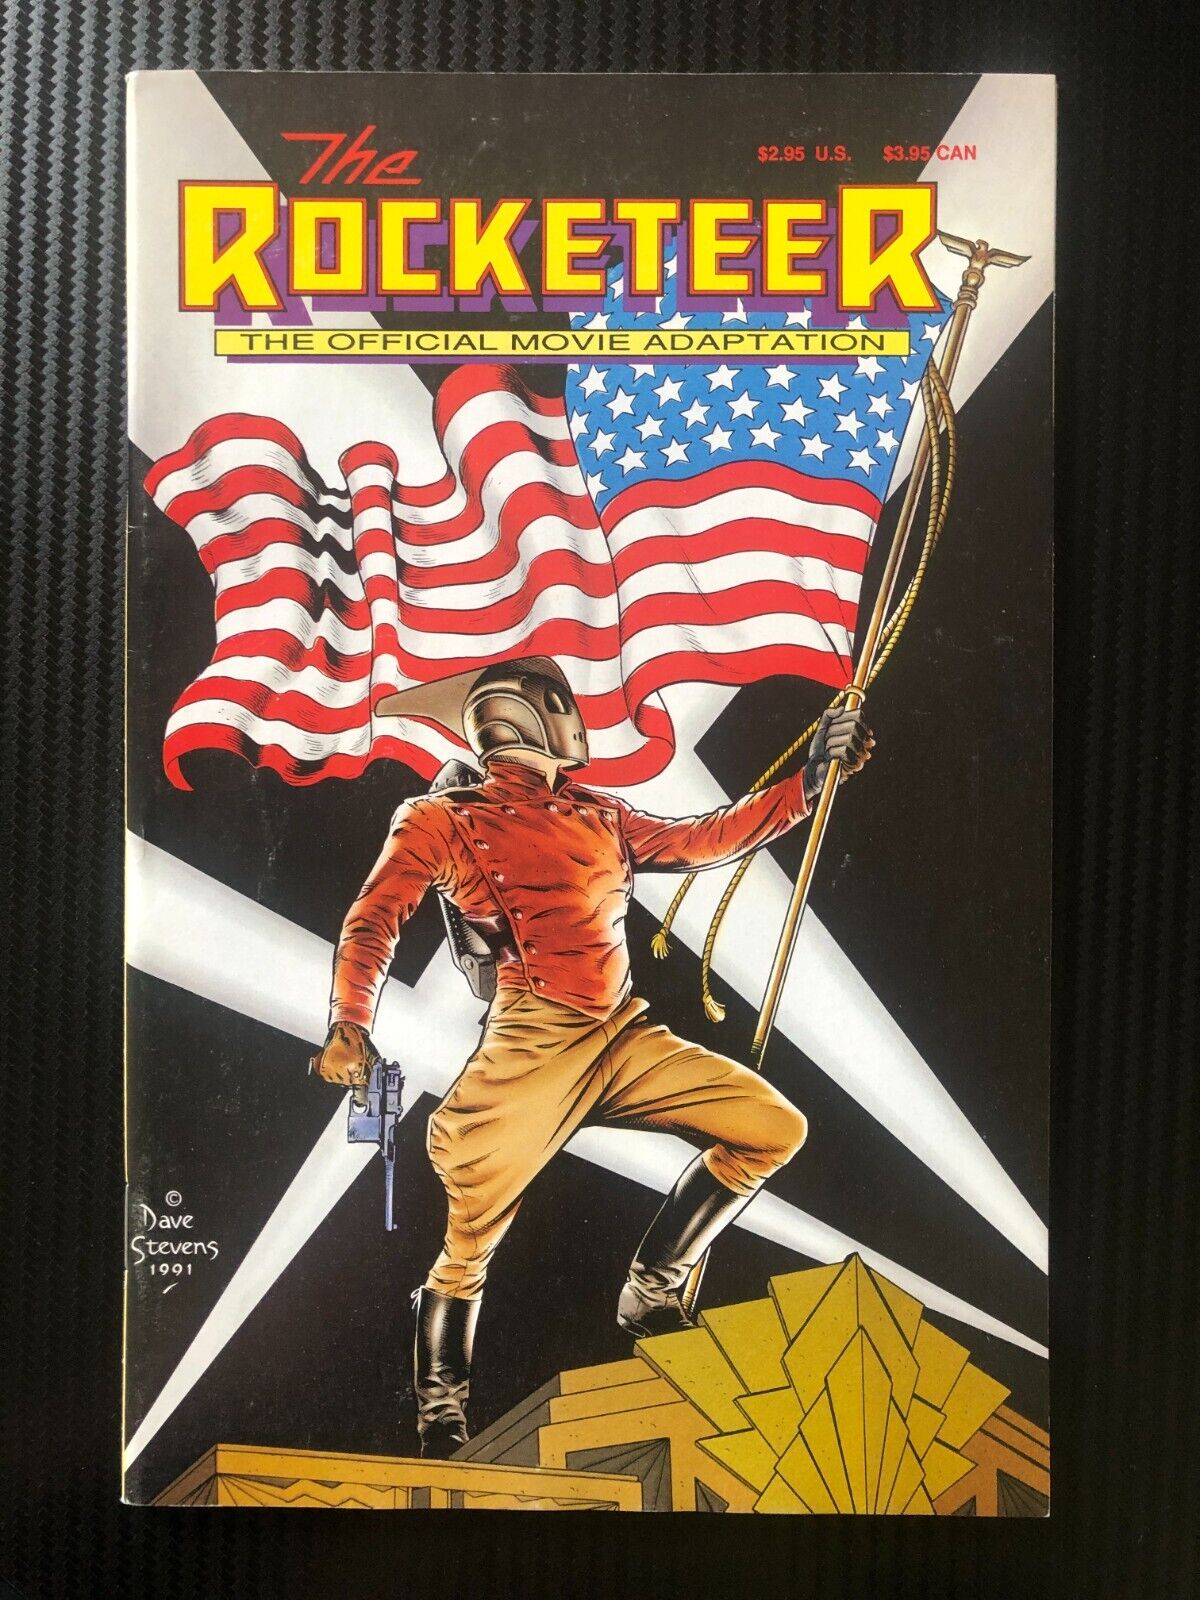 ROCKETEER #1 1991 DISNEY MOVIE ADAPTATION : DAVE STEVENS COVER AND ARTWORK